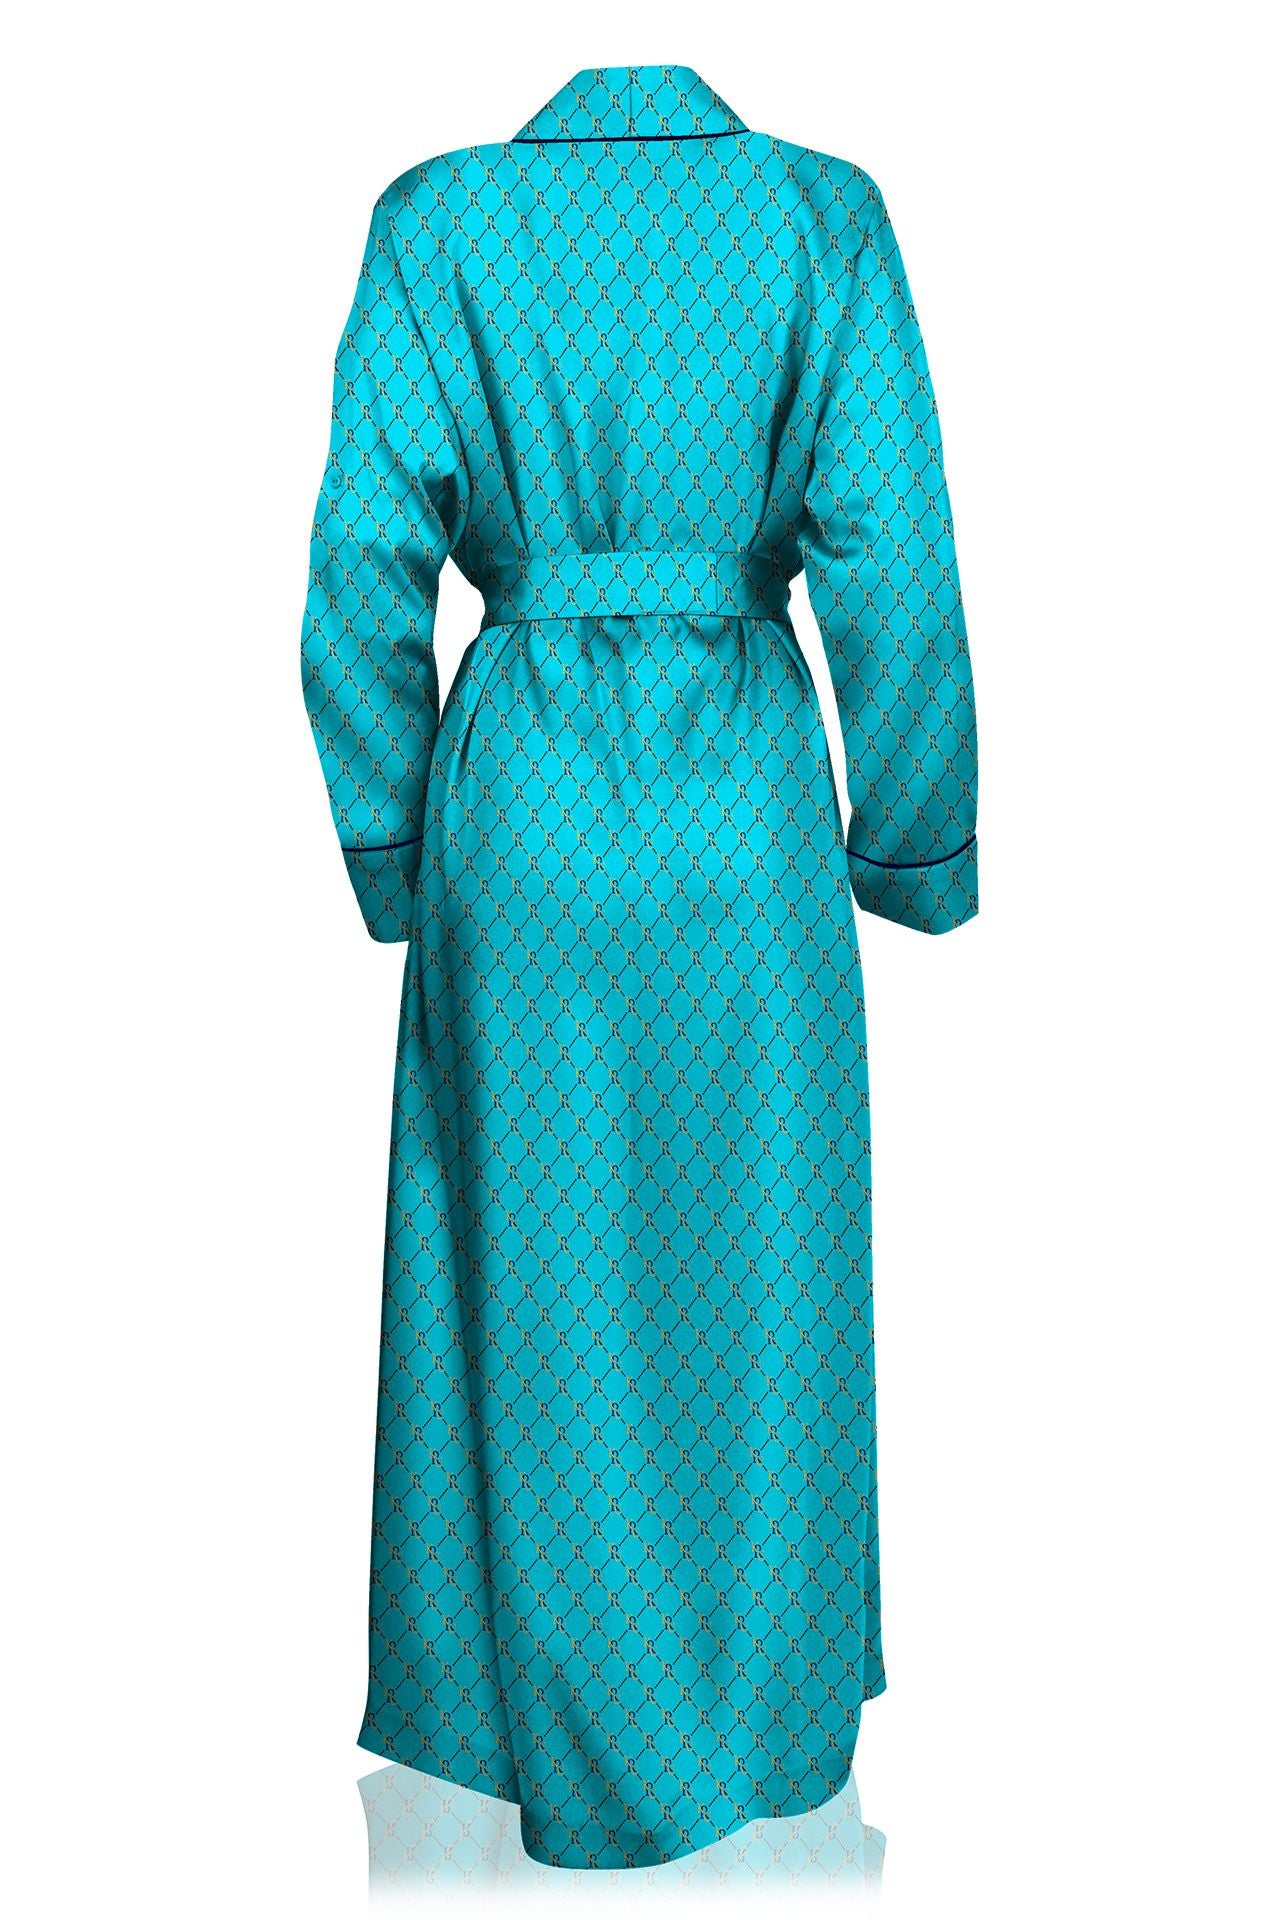 "Kyle X Shahida" "womens long silk robe" "silk kimono for women" "silk robe blue"